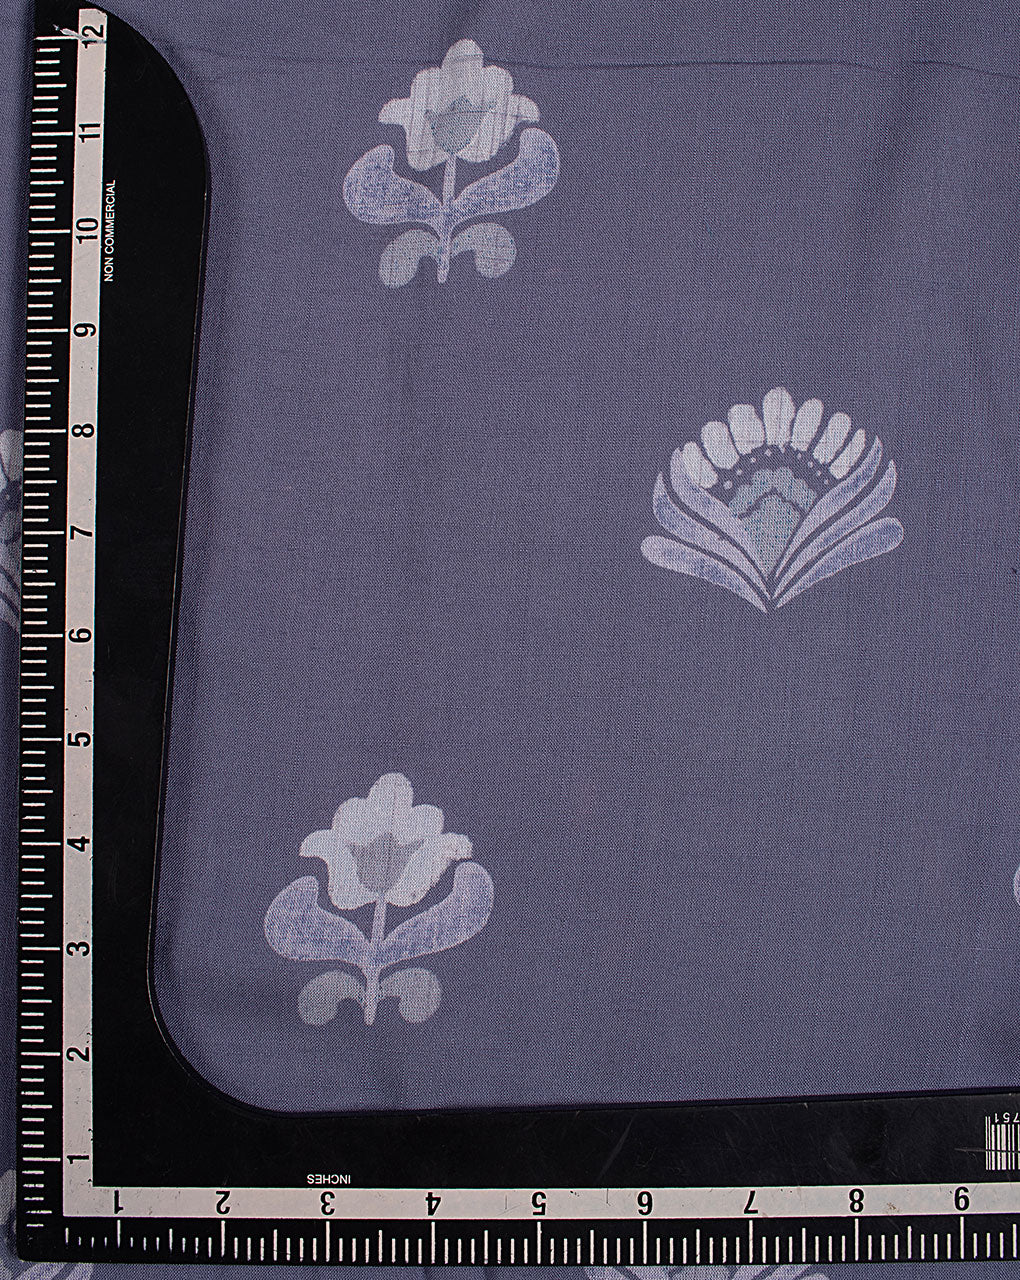 Screen Print Slub Rayon Fabric